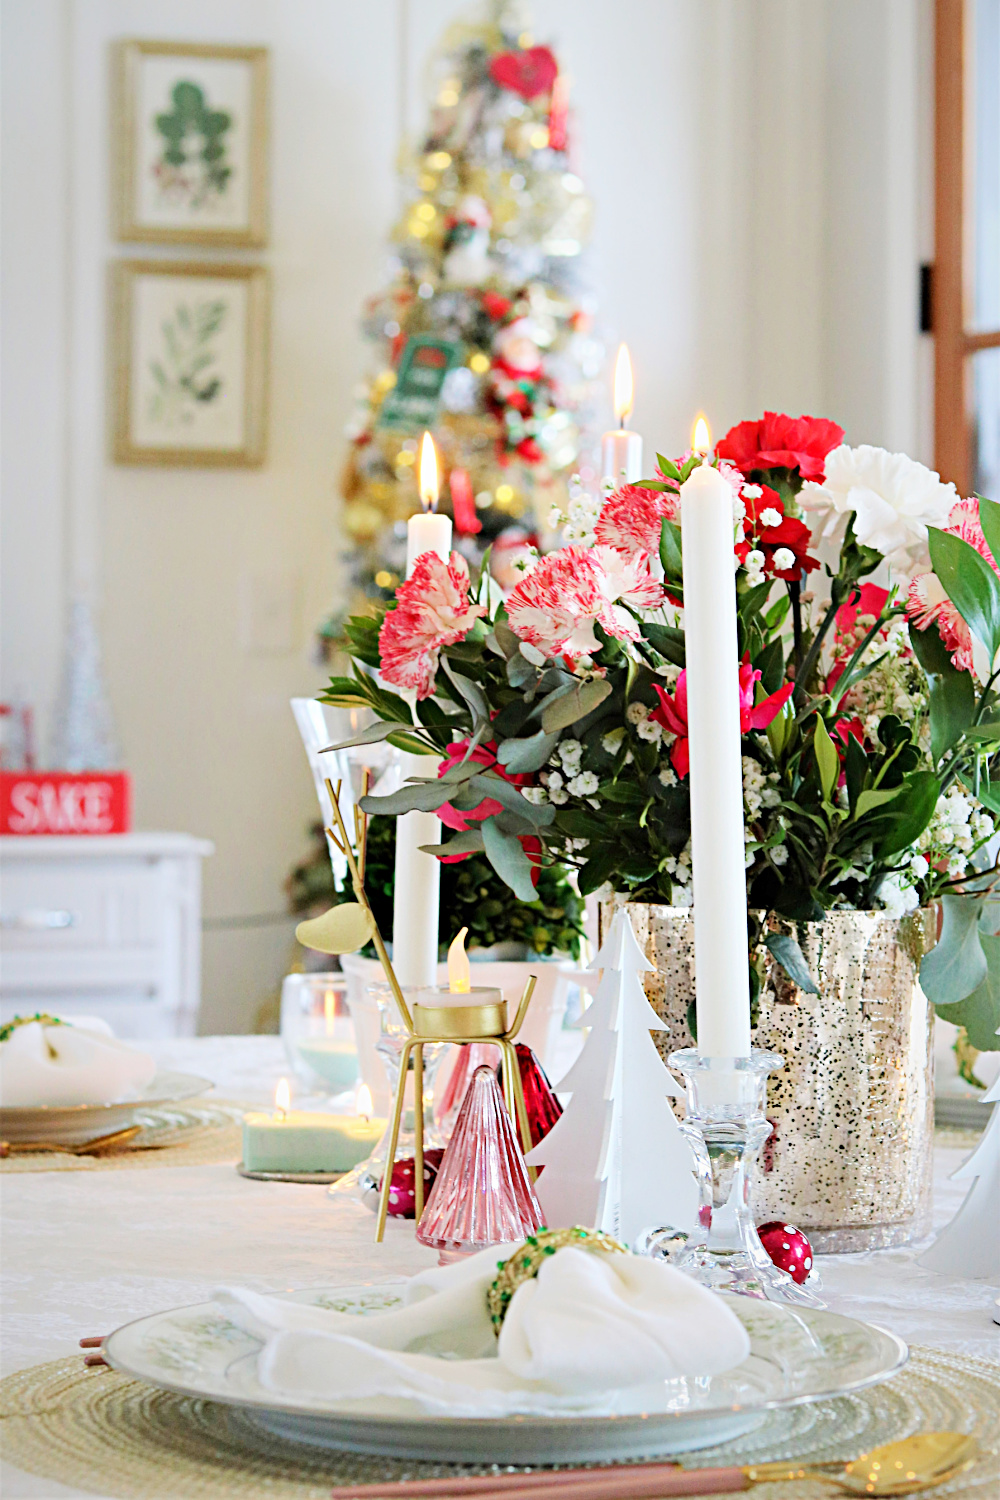 White-Tablecloth-Candlesticks-Winter-Tablescape-Floral-Arrangement-Homemkaing